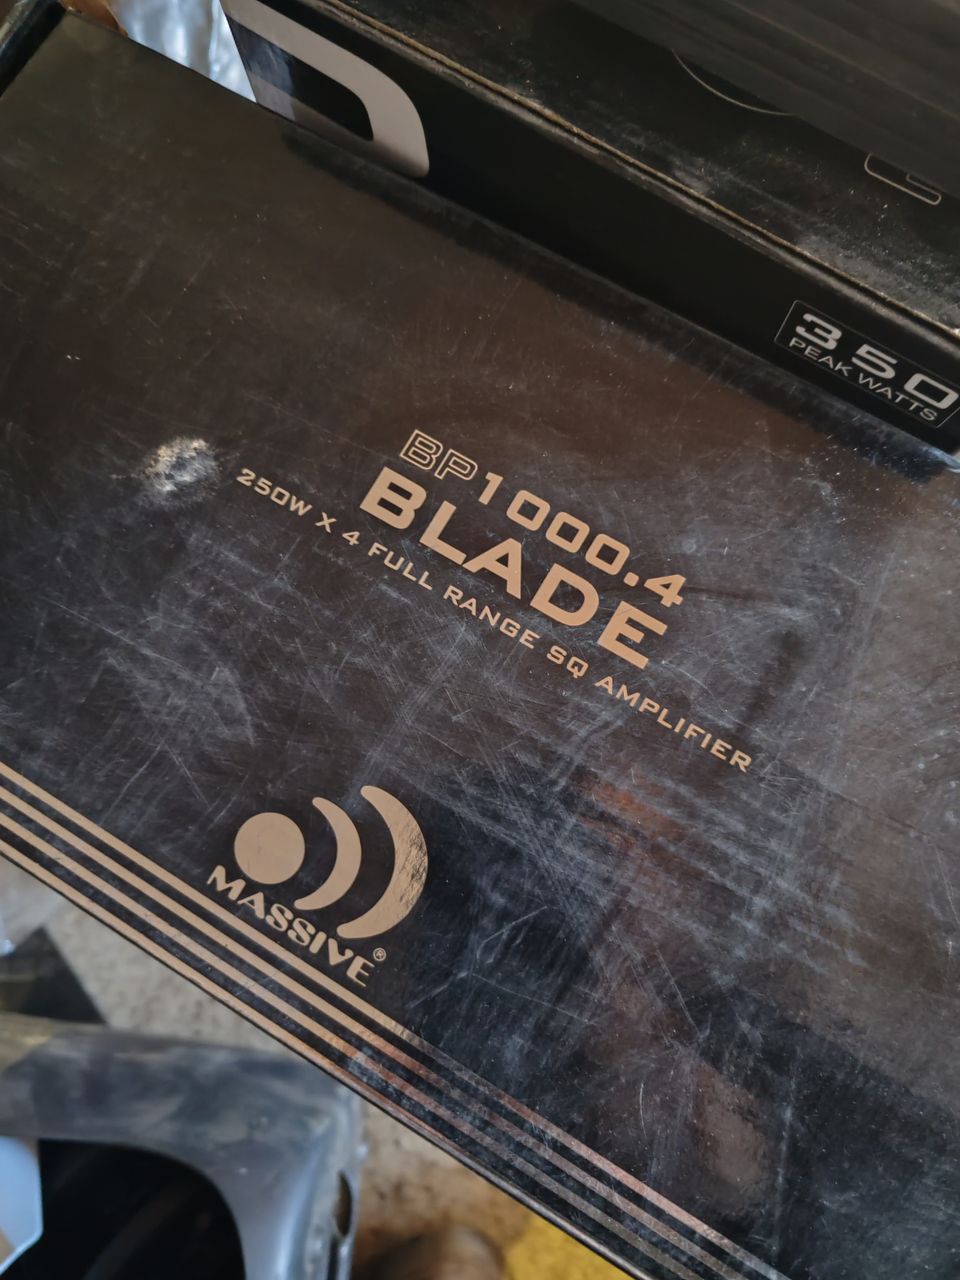 Massive audio blade 1000.4